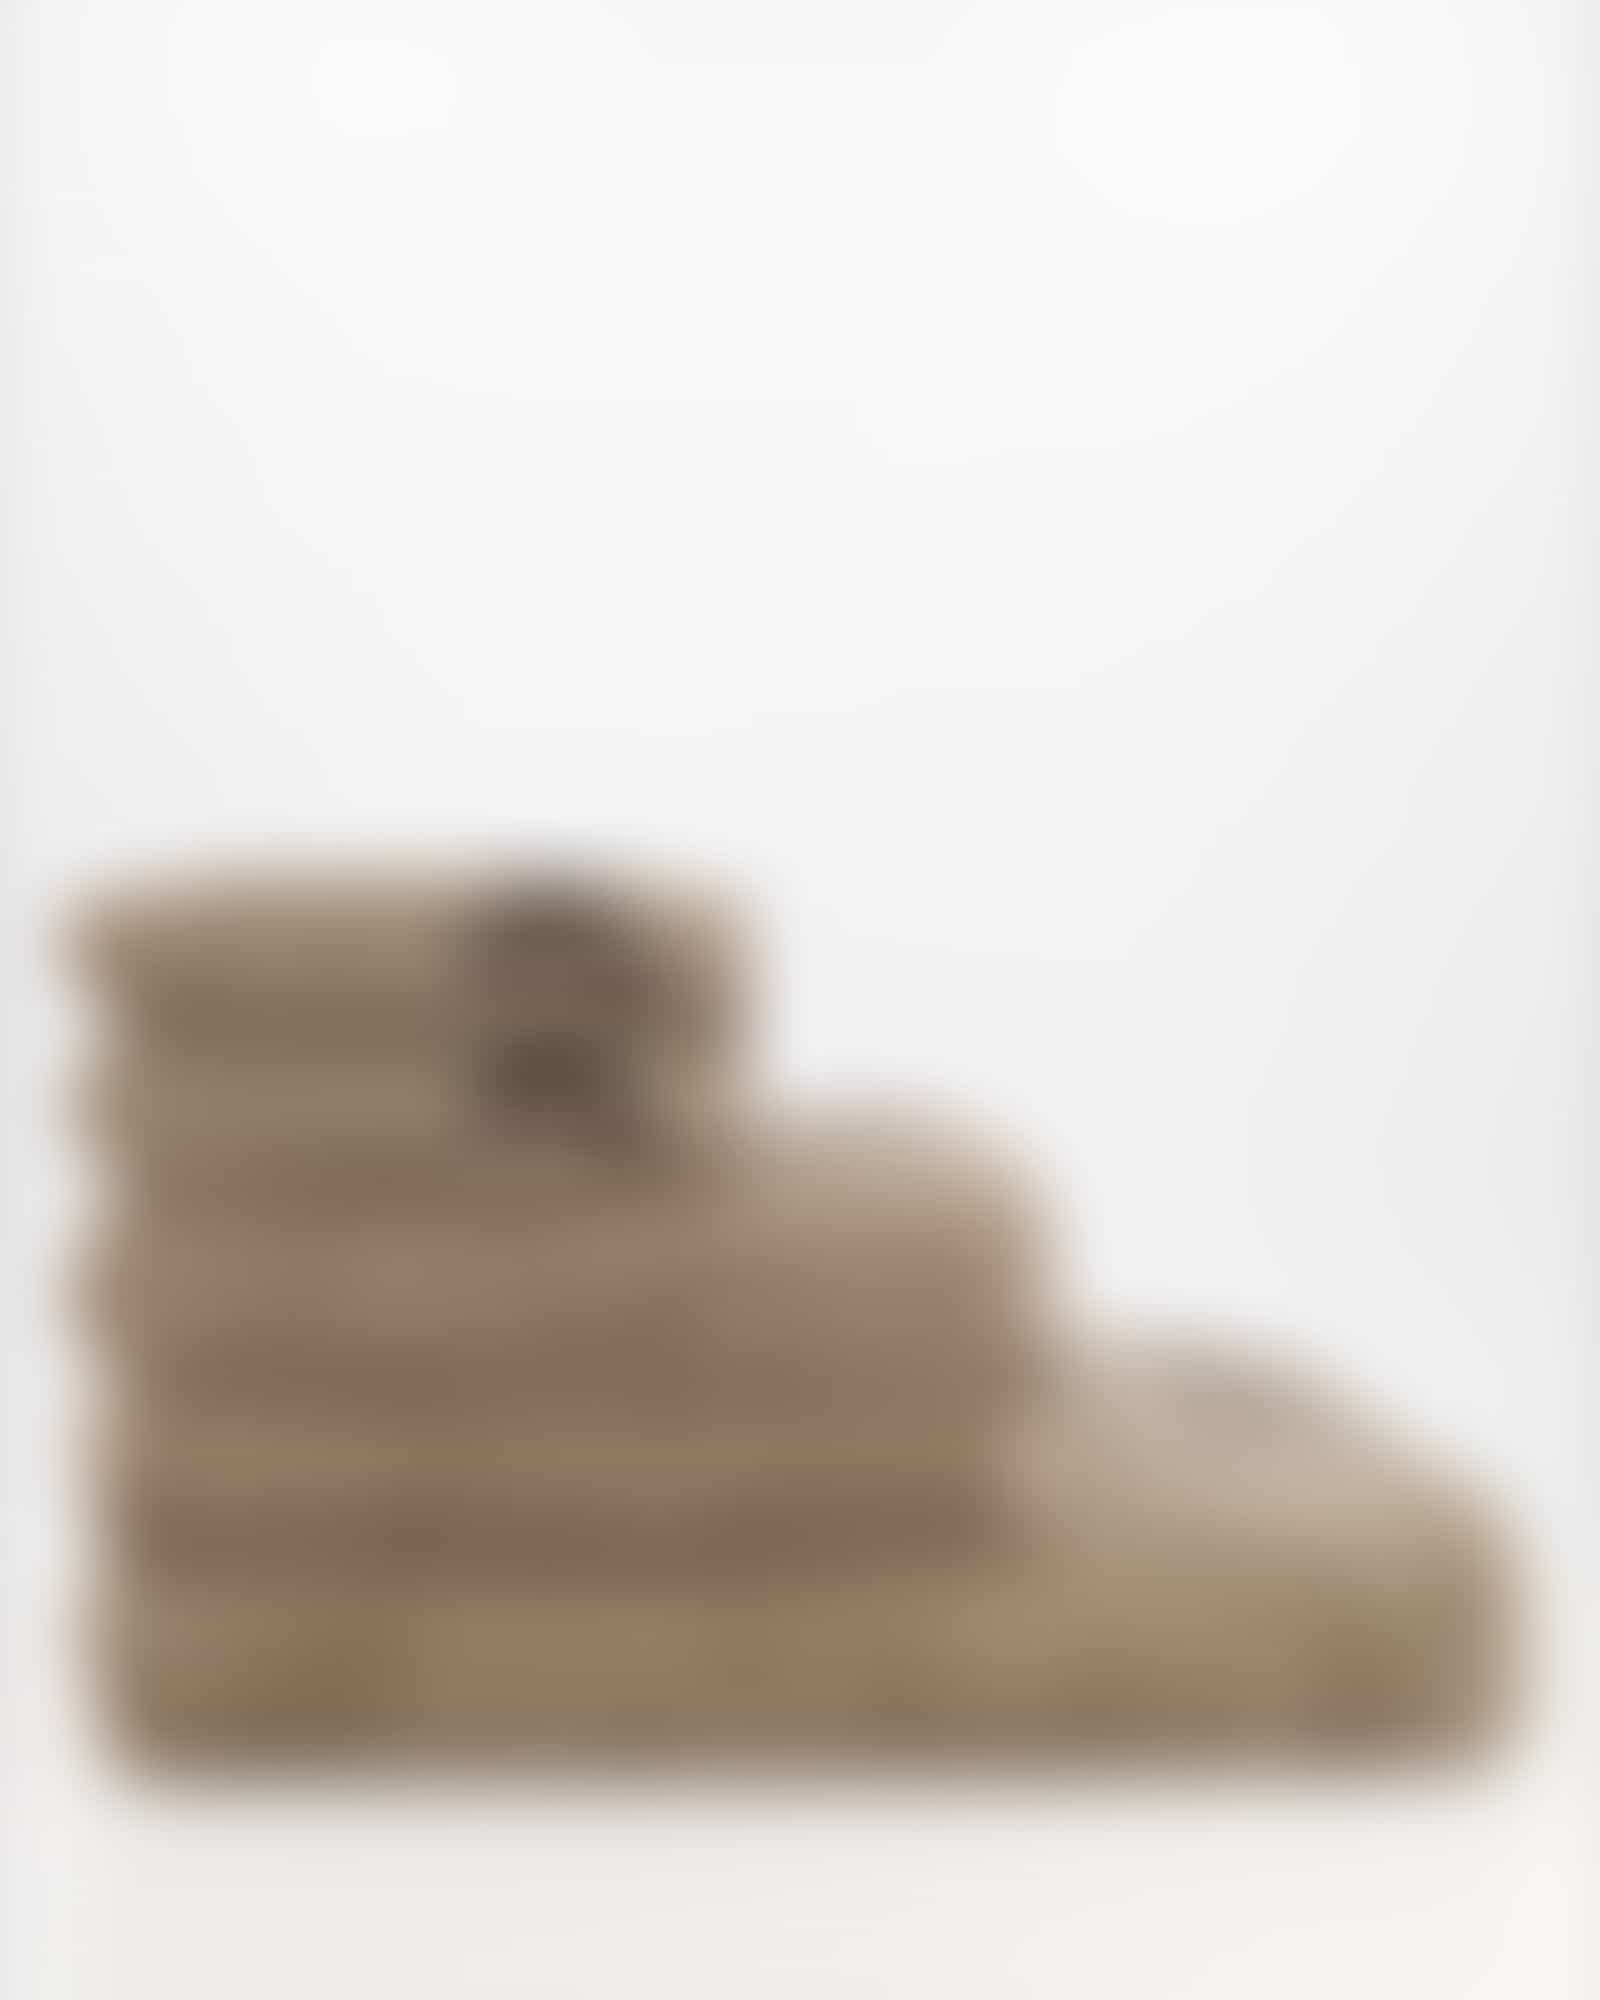 JOOP! Handtücher Classic Doubleface 1600 - Farbe: mocca - 39 - Seiflappen 30x30 cm